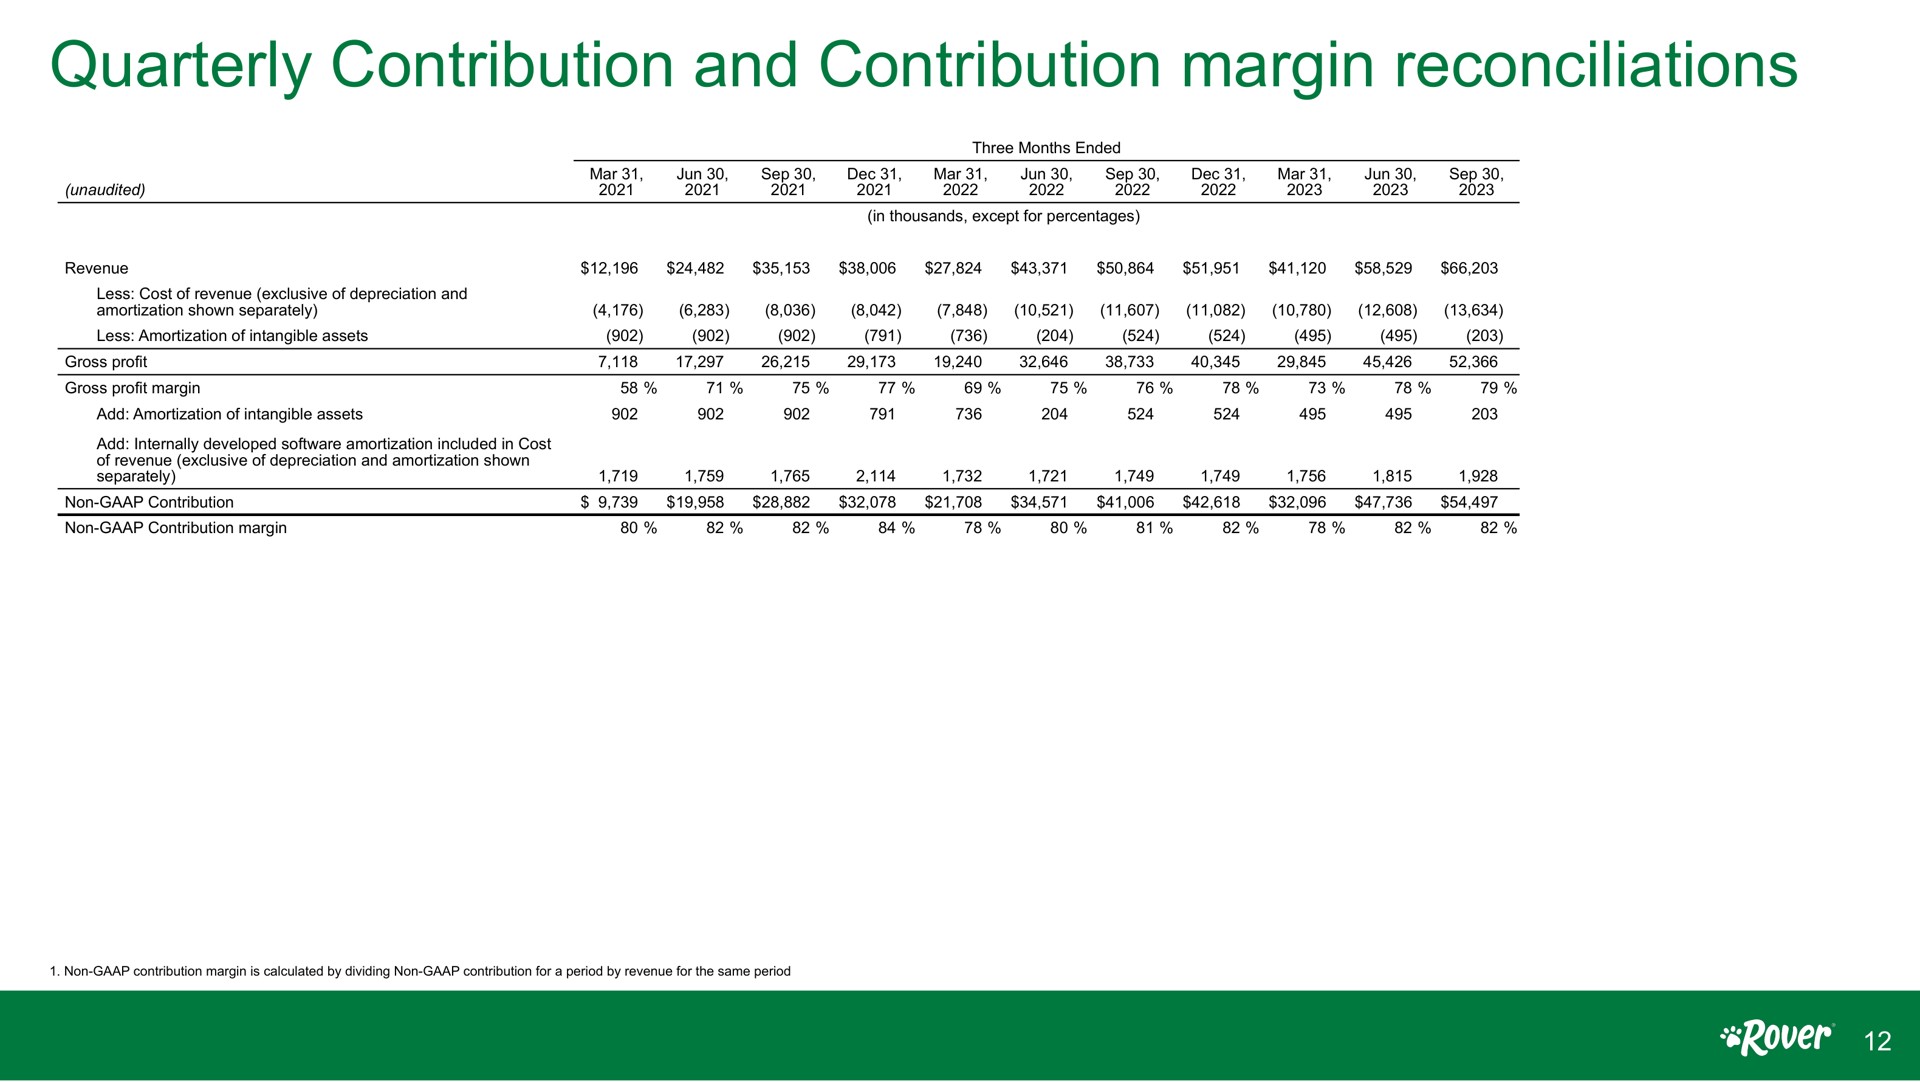 quarterly contribution and contribution margin reconciliations | Rover